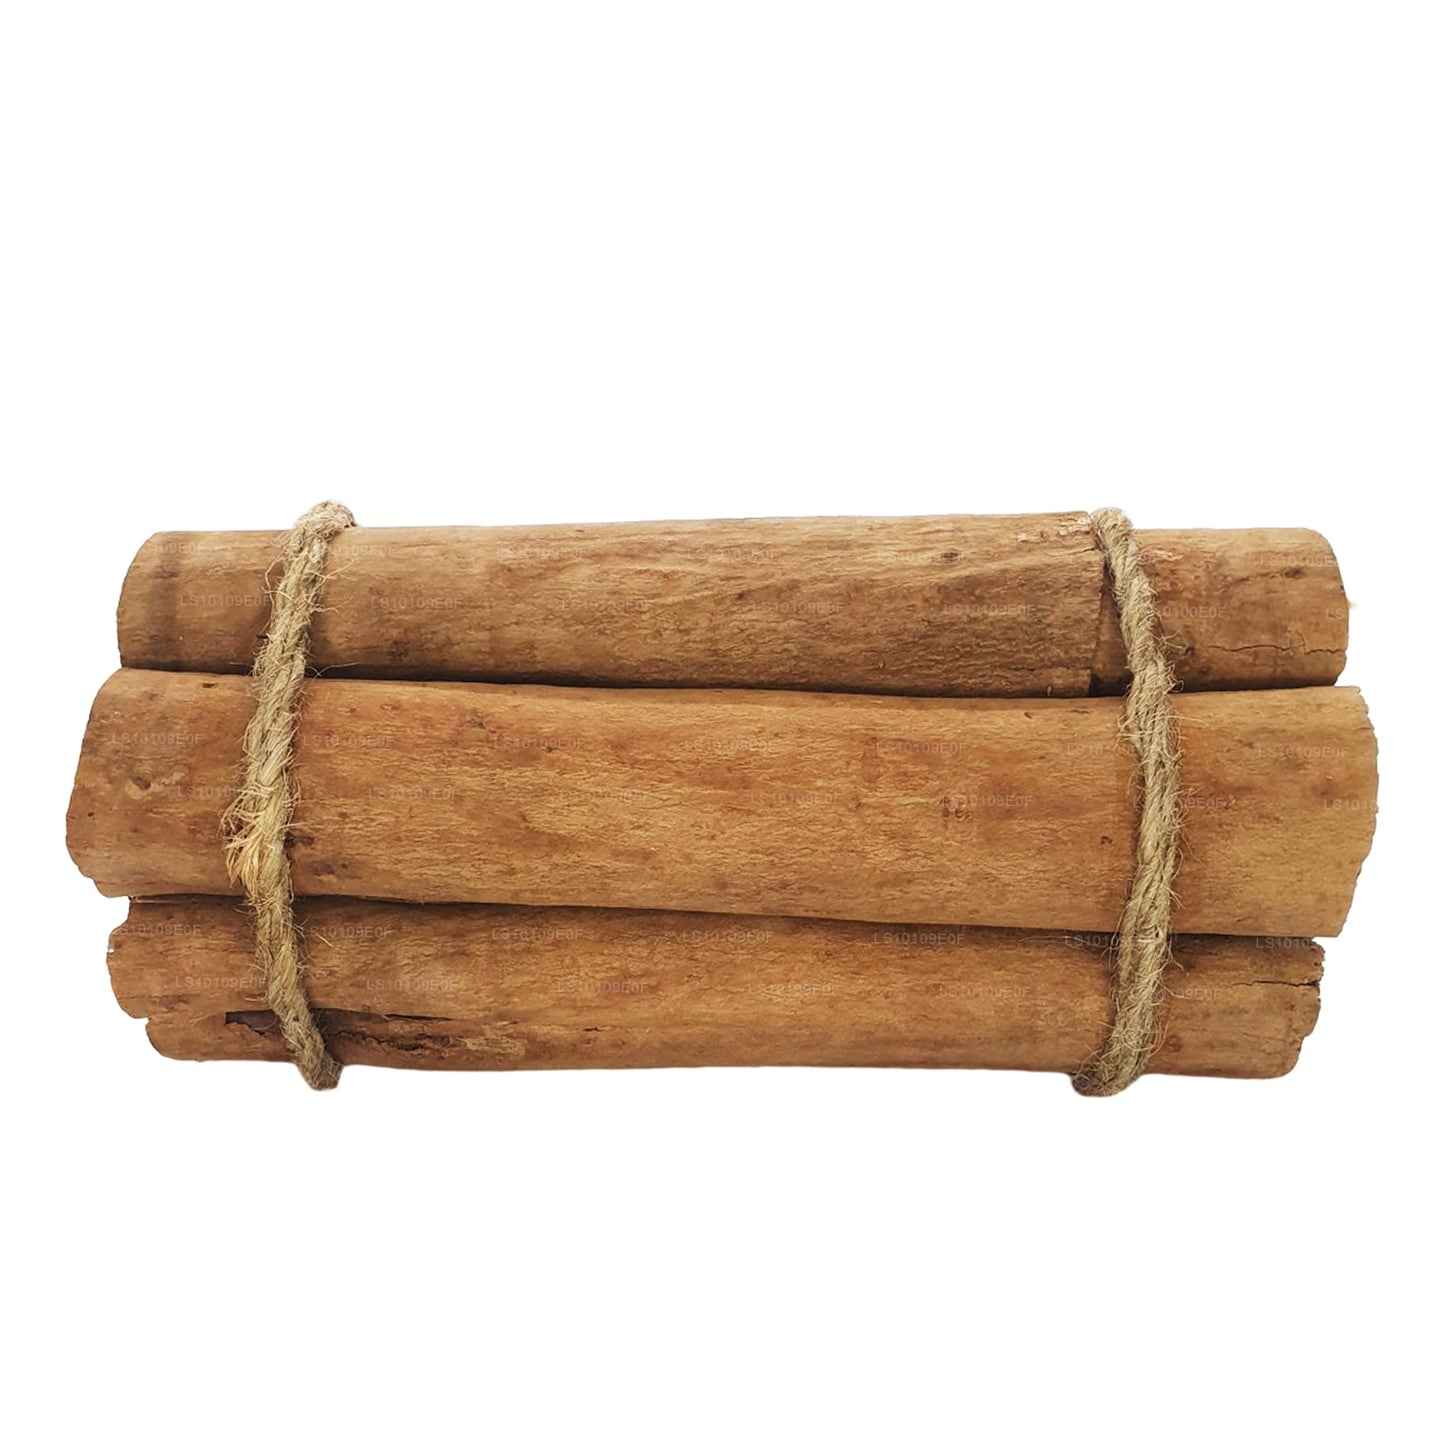 Lakpura "H3" Grade Ceylon True Cinnamon Barks Pack